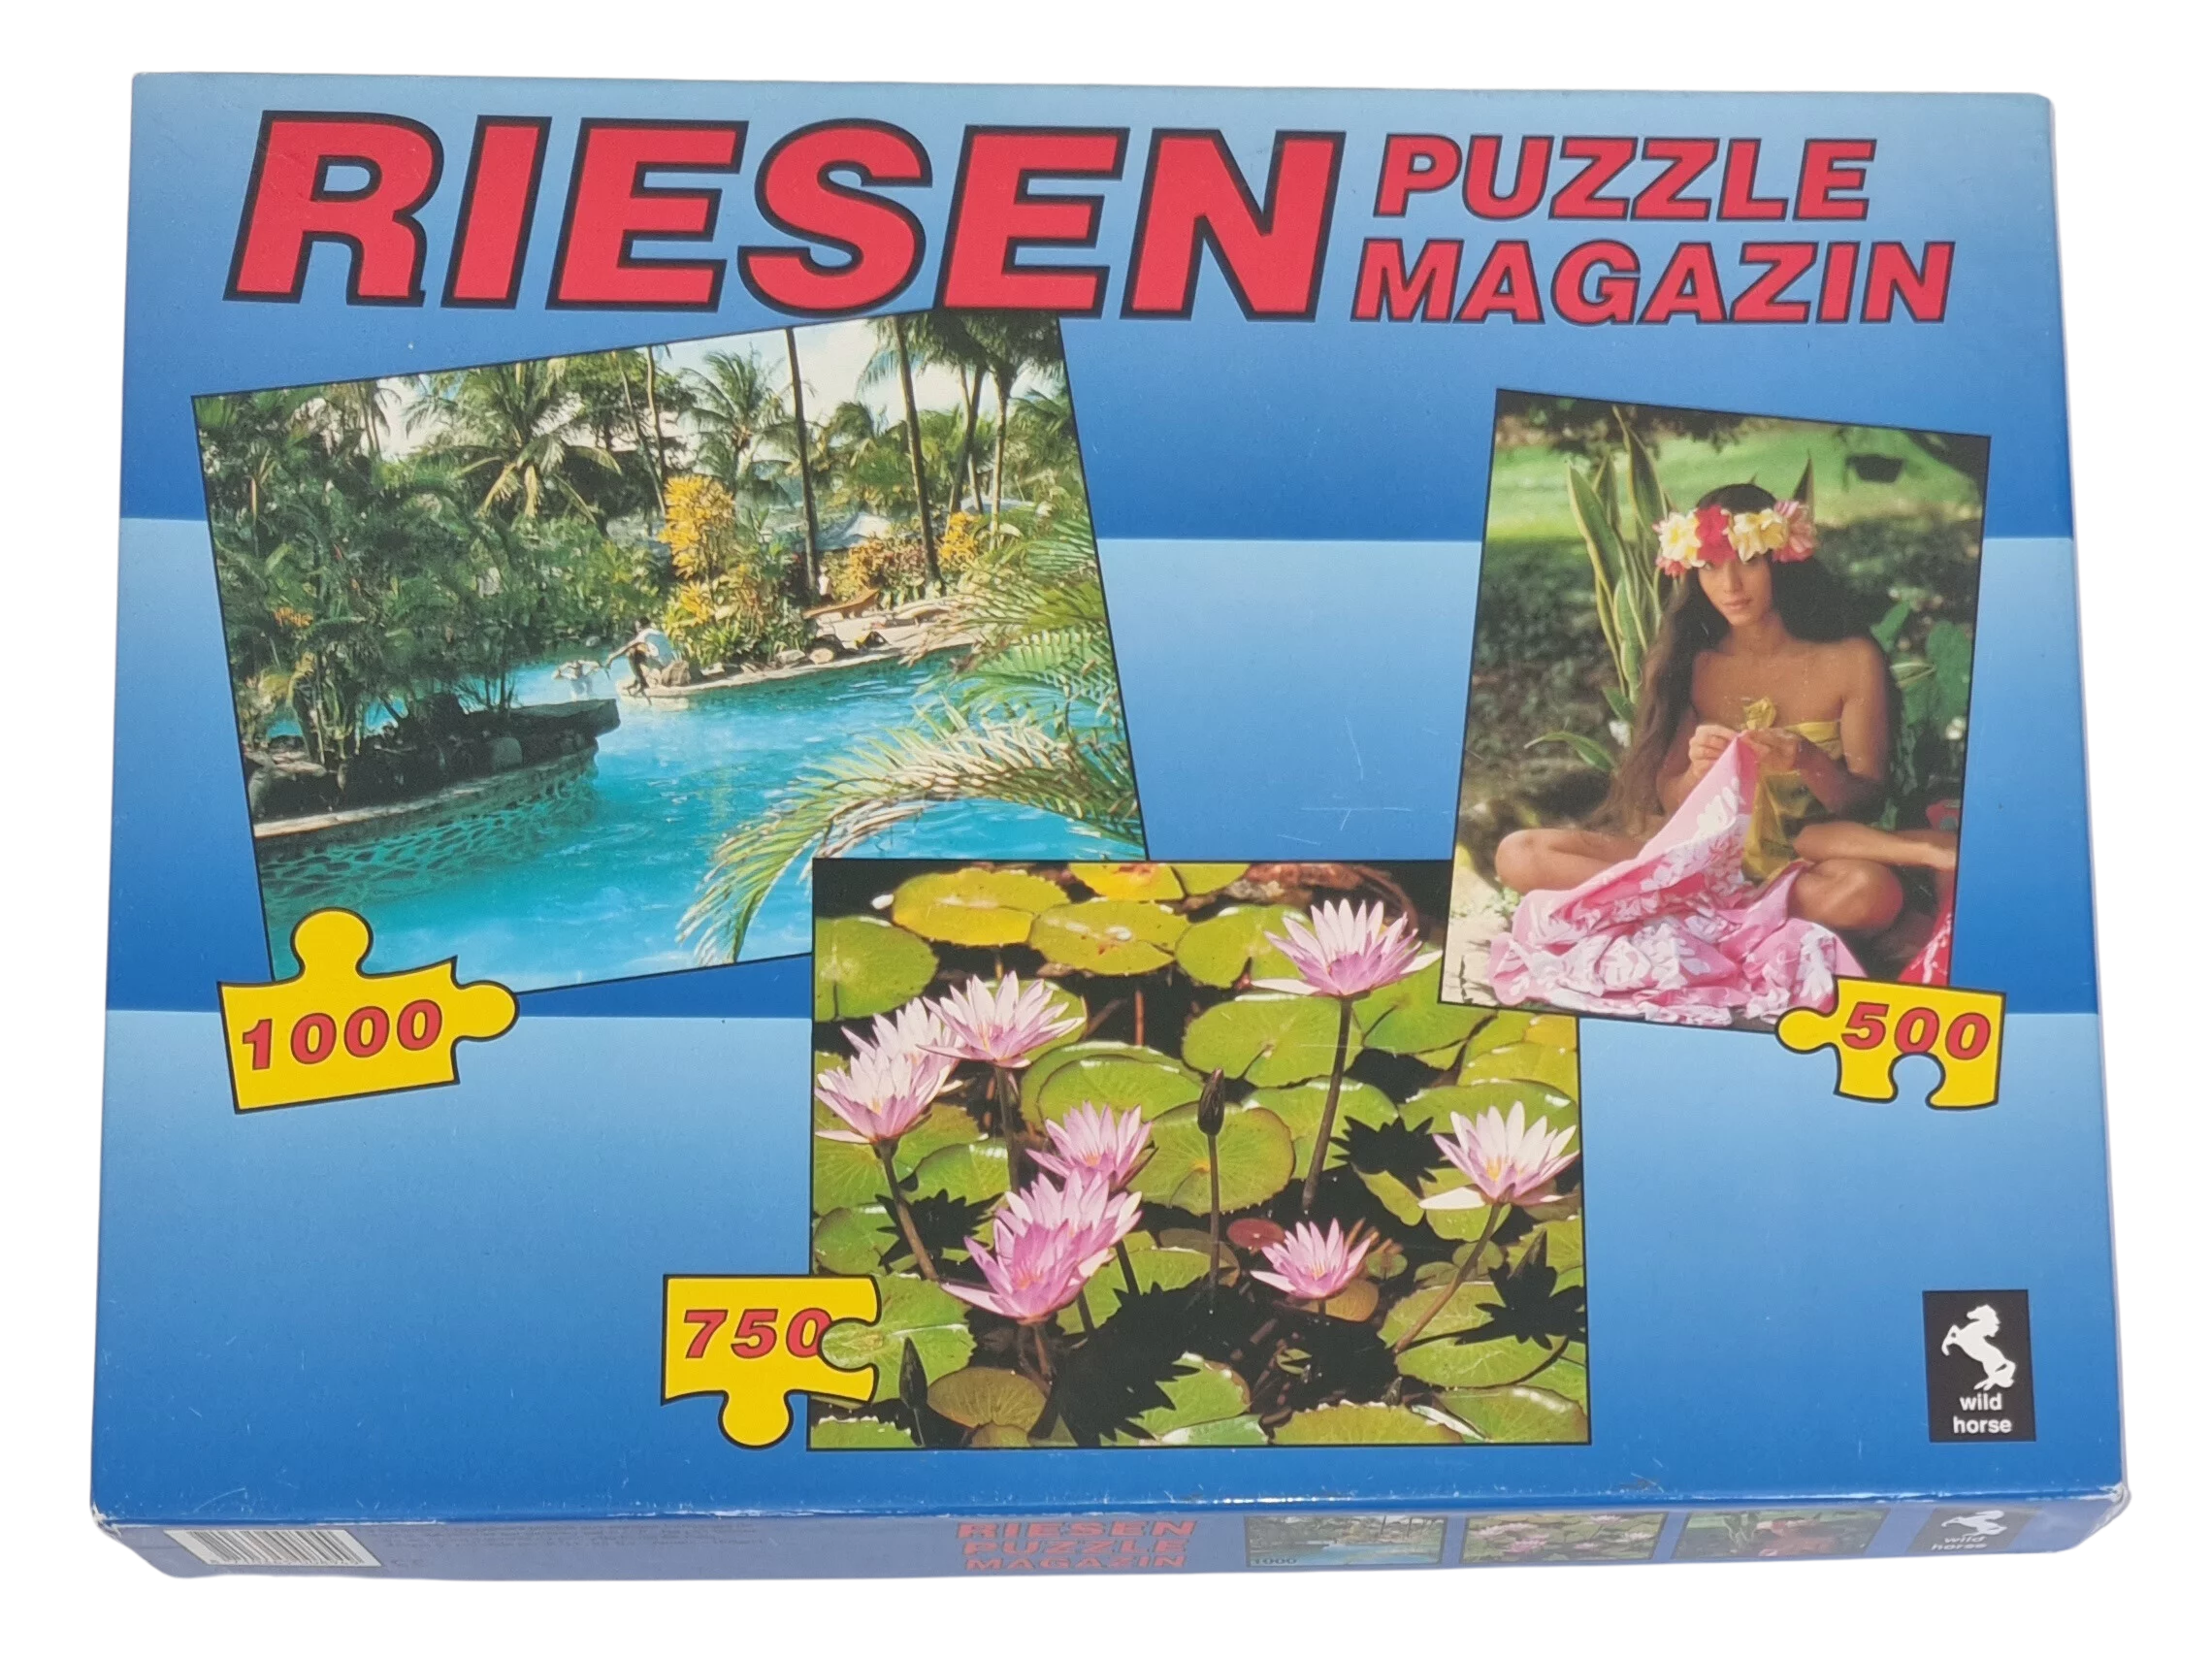 Wild Horse Puzzle 500, 750, 1000 Teile Riesen Puzzle Magazin